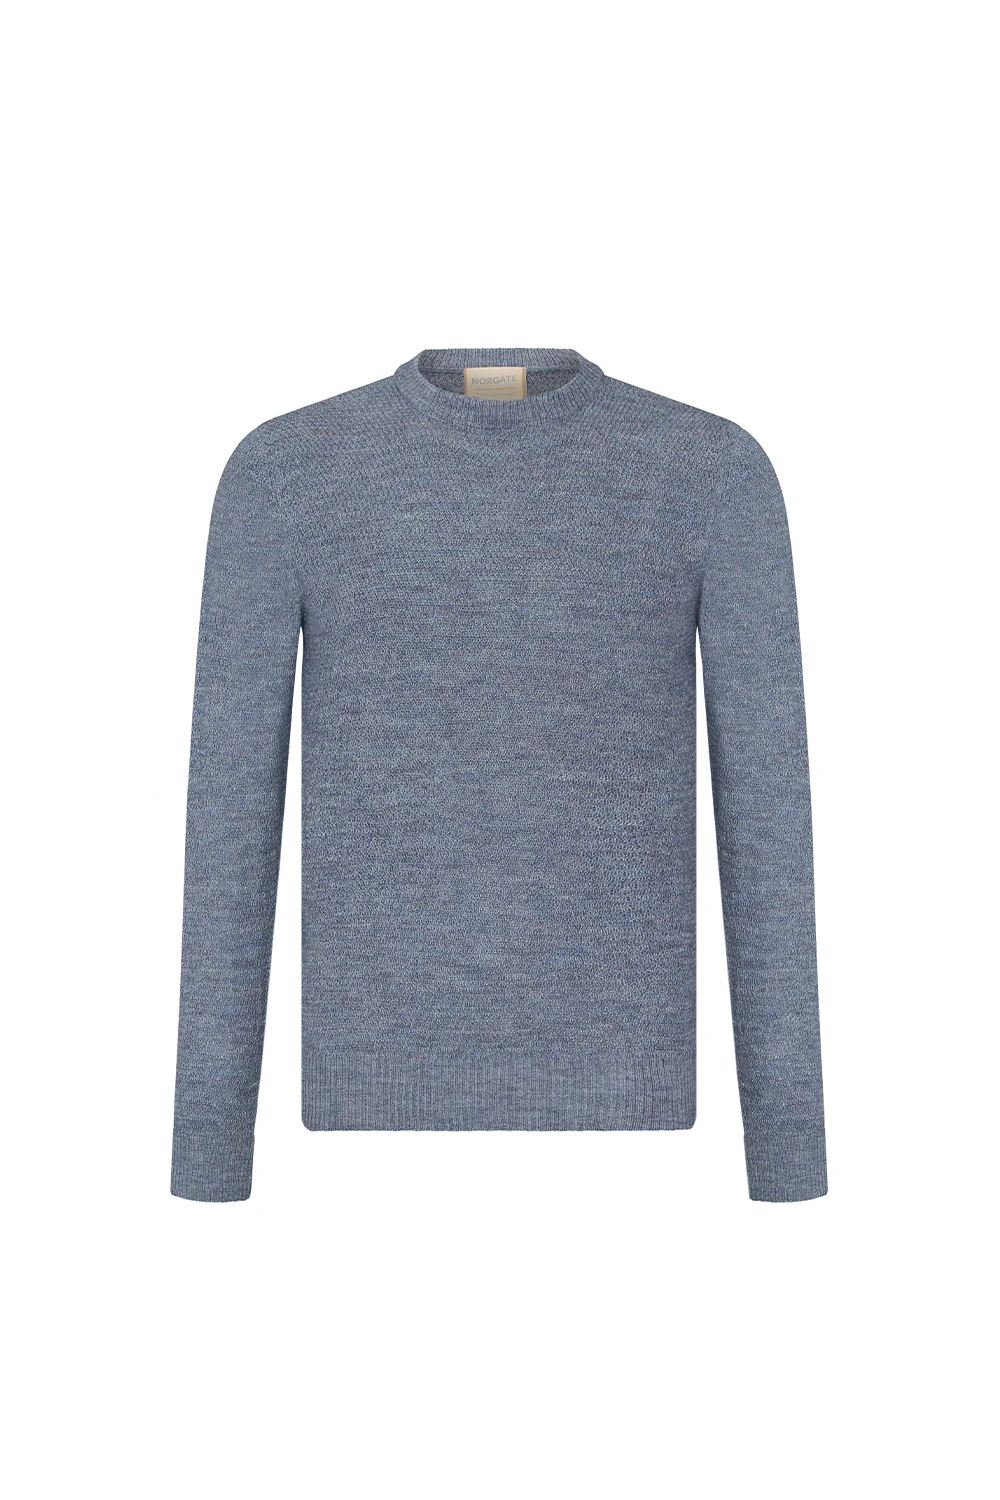 Sky Sweater- Men's Clothing - Norgate. Luxury Alpaca Cothing